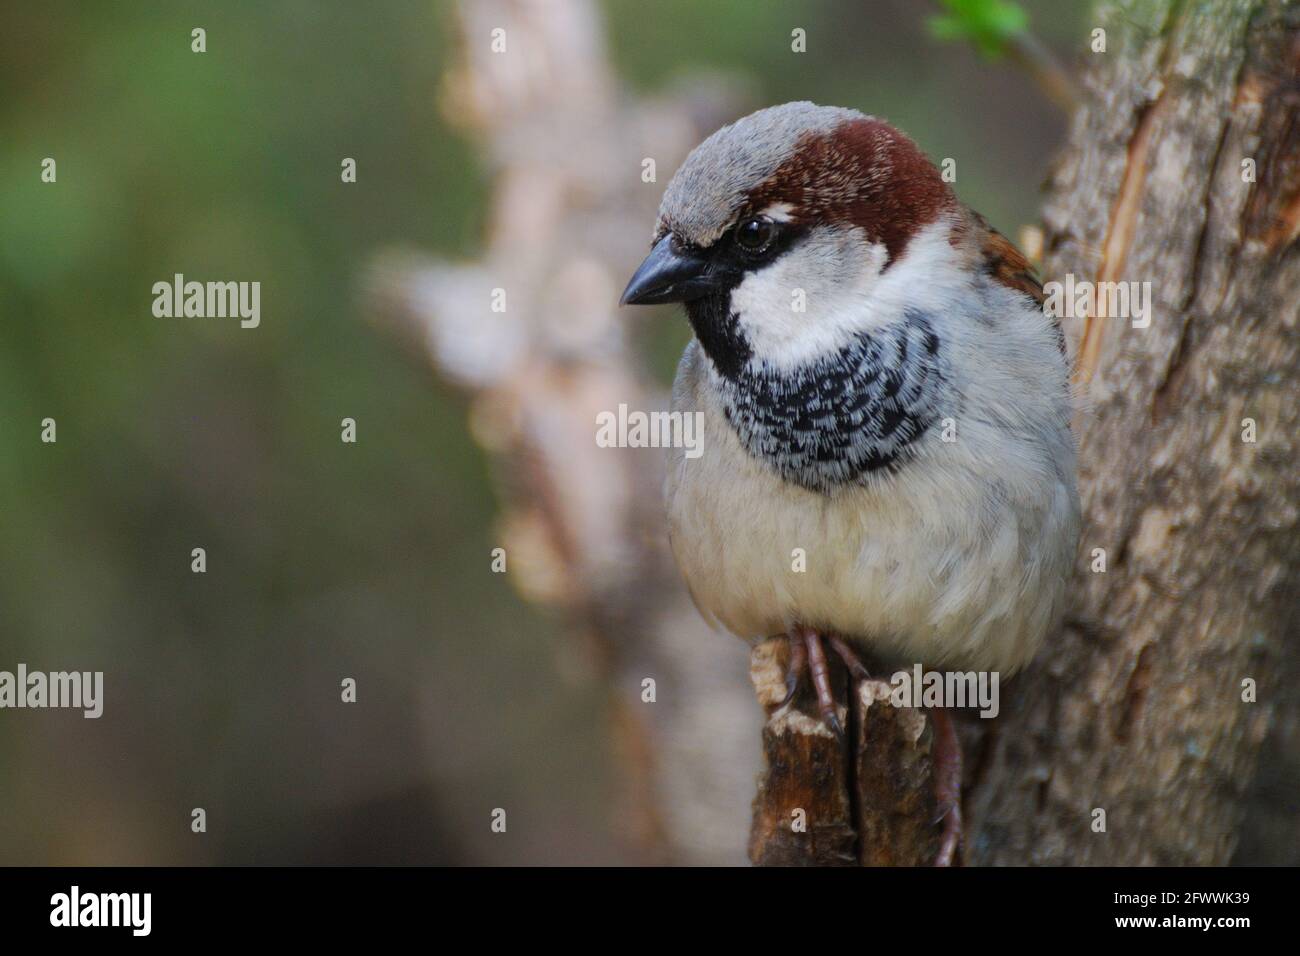 House sparrow (Passer domesticus) close-up photo Stock Photo